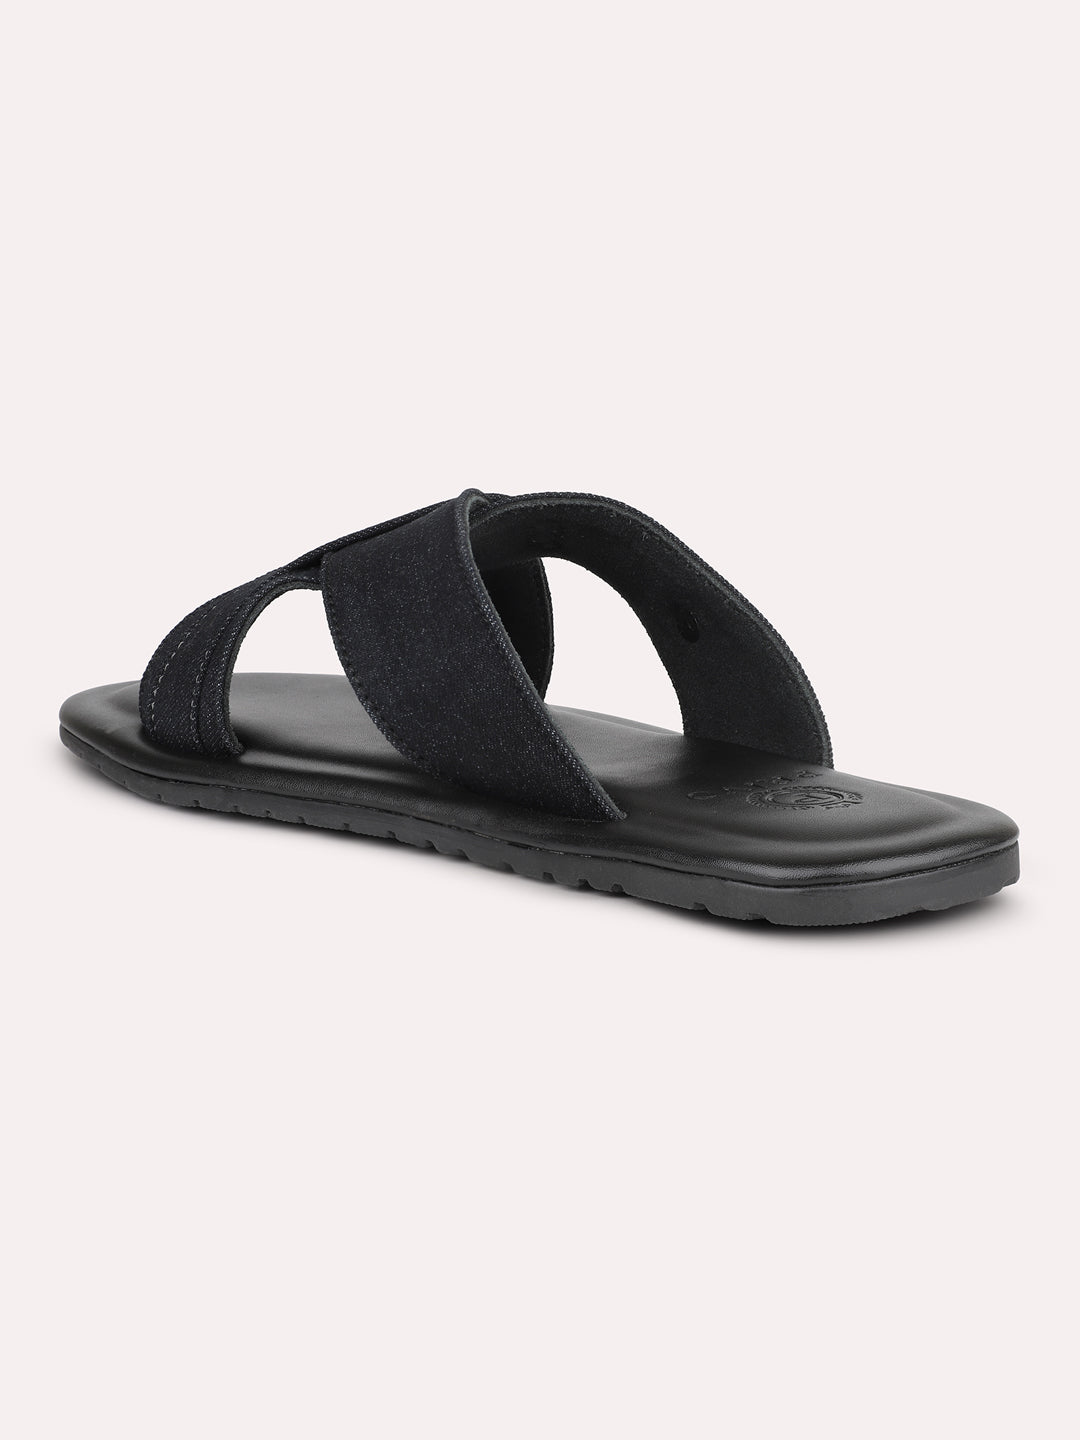 Privo Denim Black Casual Sandal With Buckle For Men